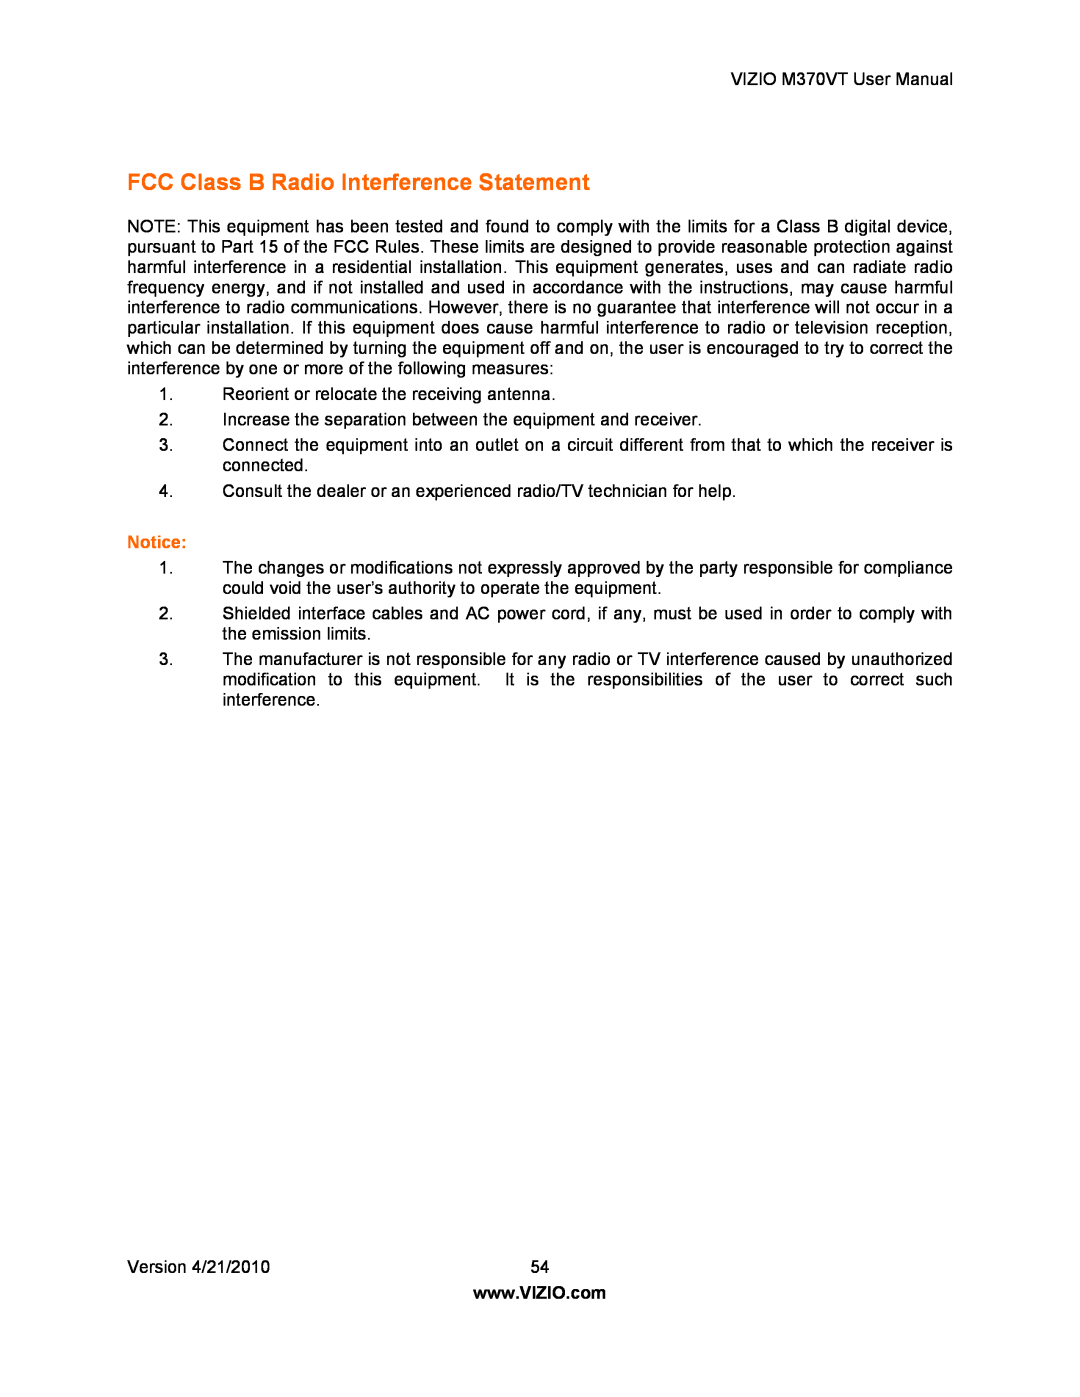 Vizio M370VT manual FCC Class B Radio Interference Statement 